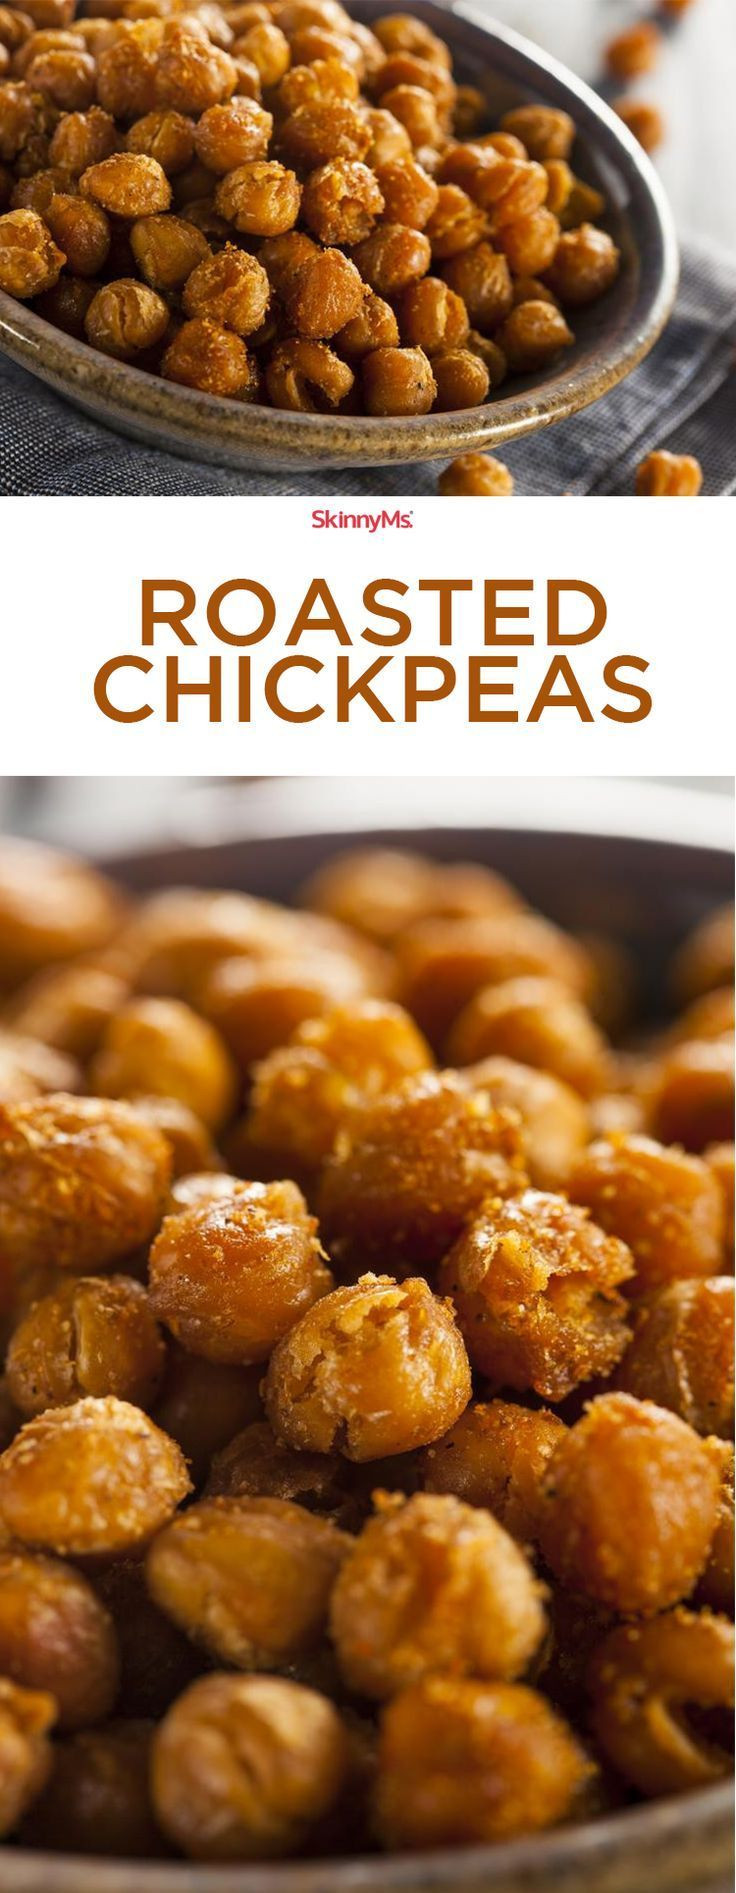 Chickpea Snacks Recipes
 Roasted Chickpeas Recipe